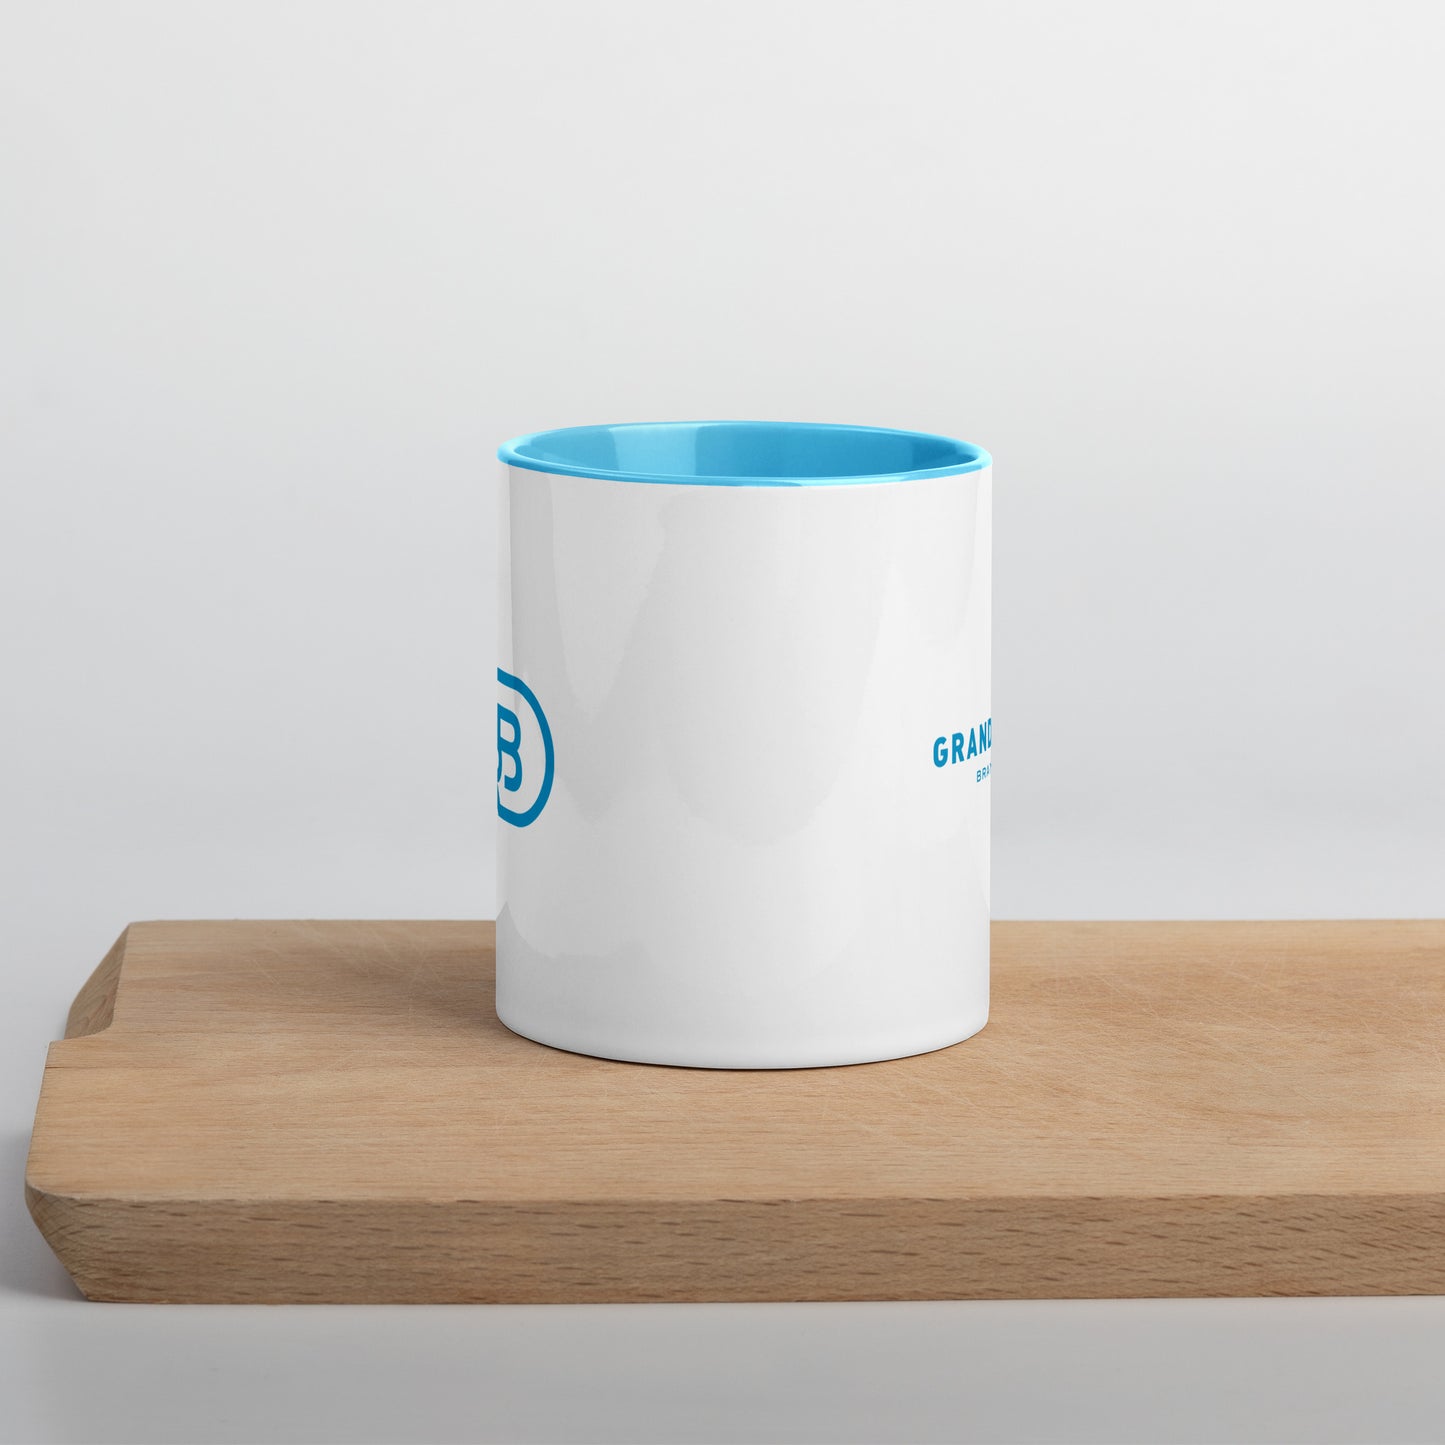 GRB Mug – Blue